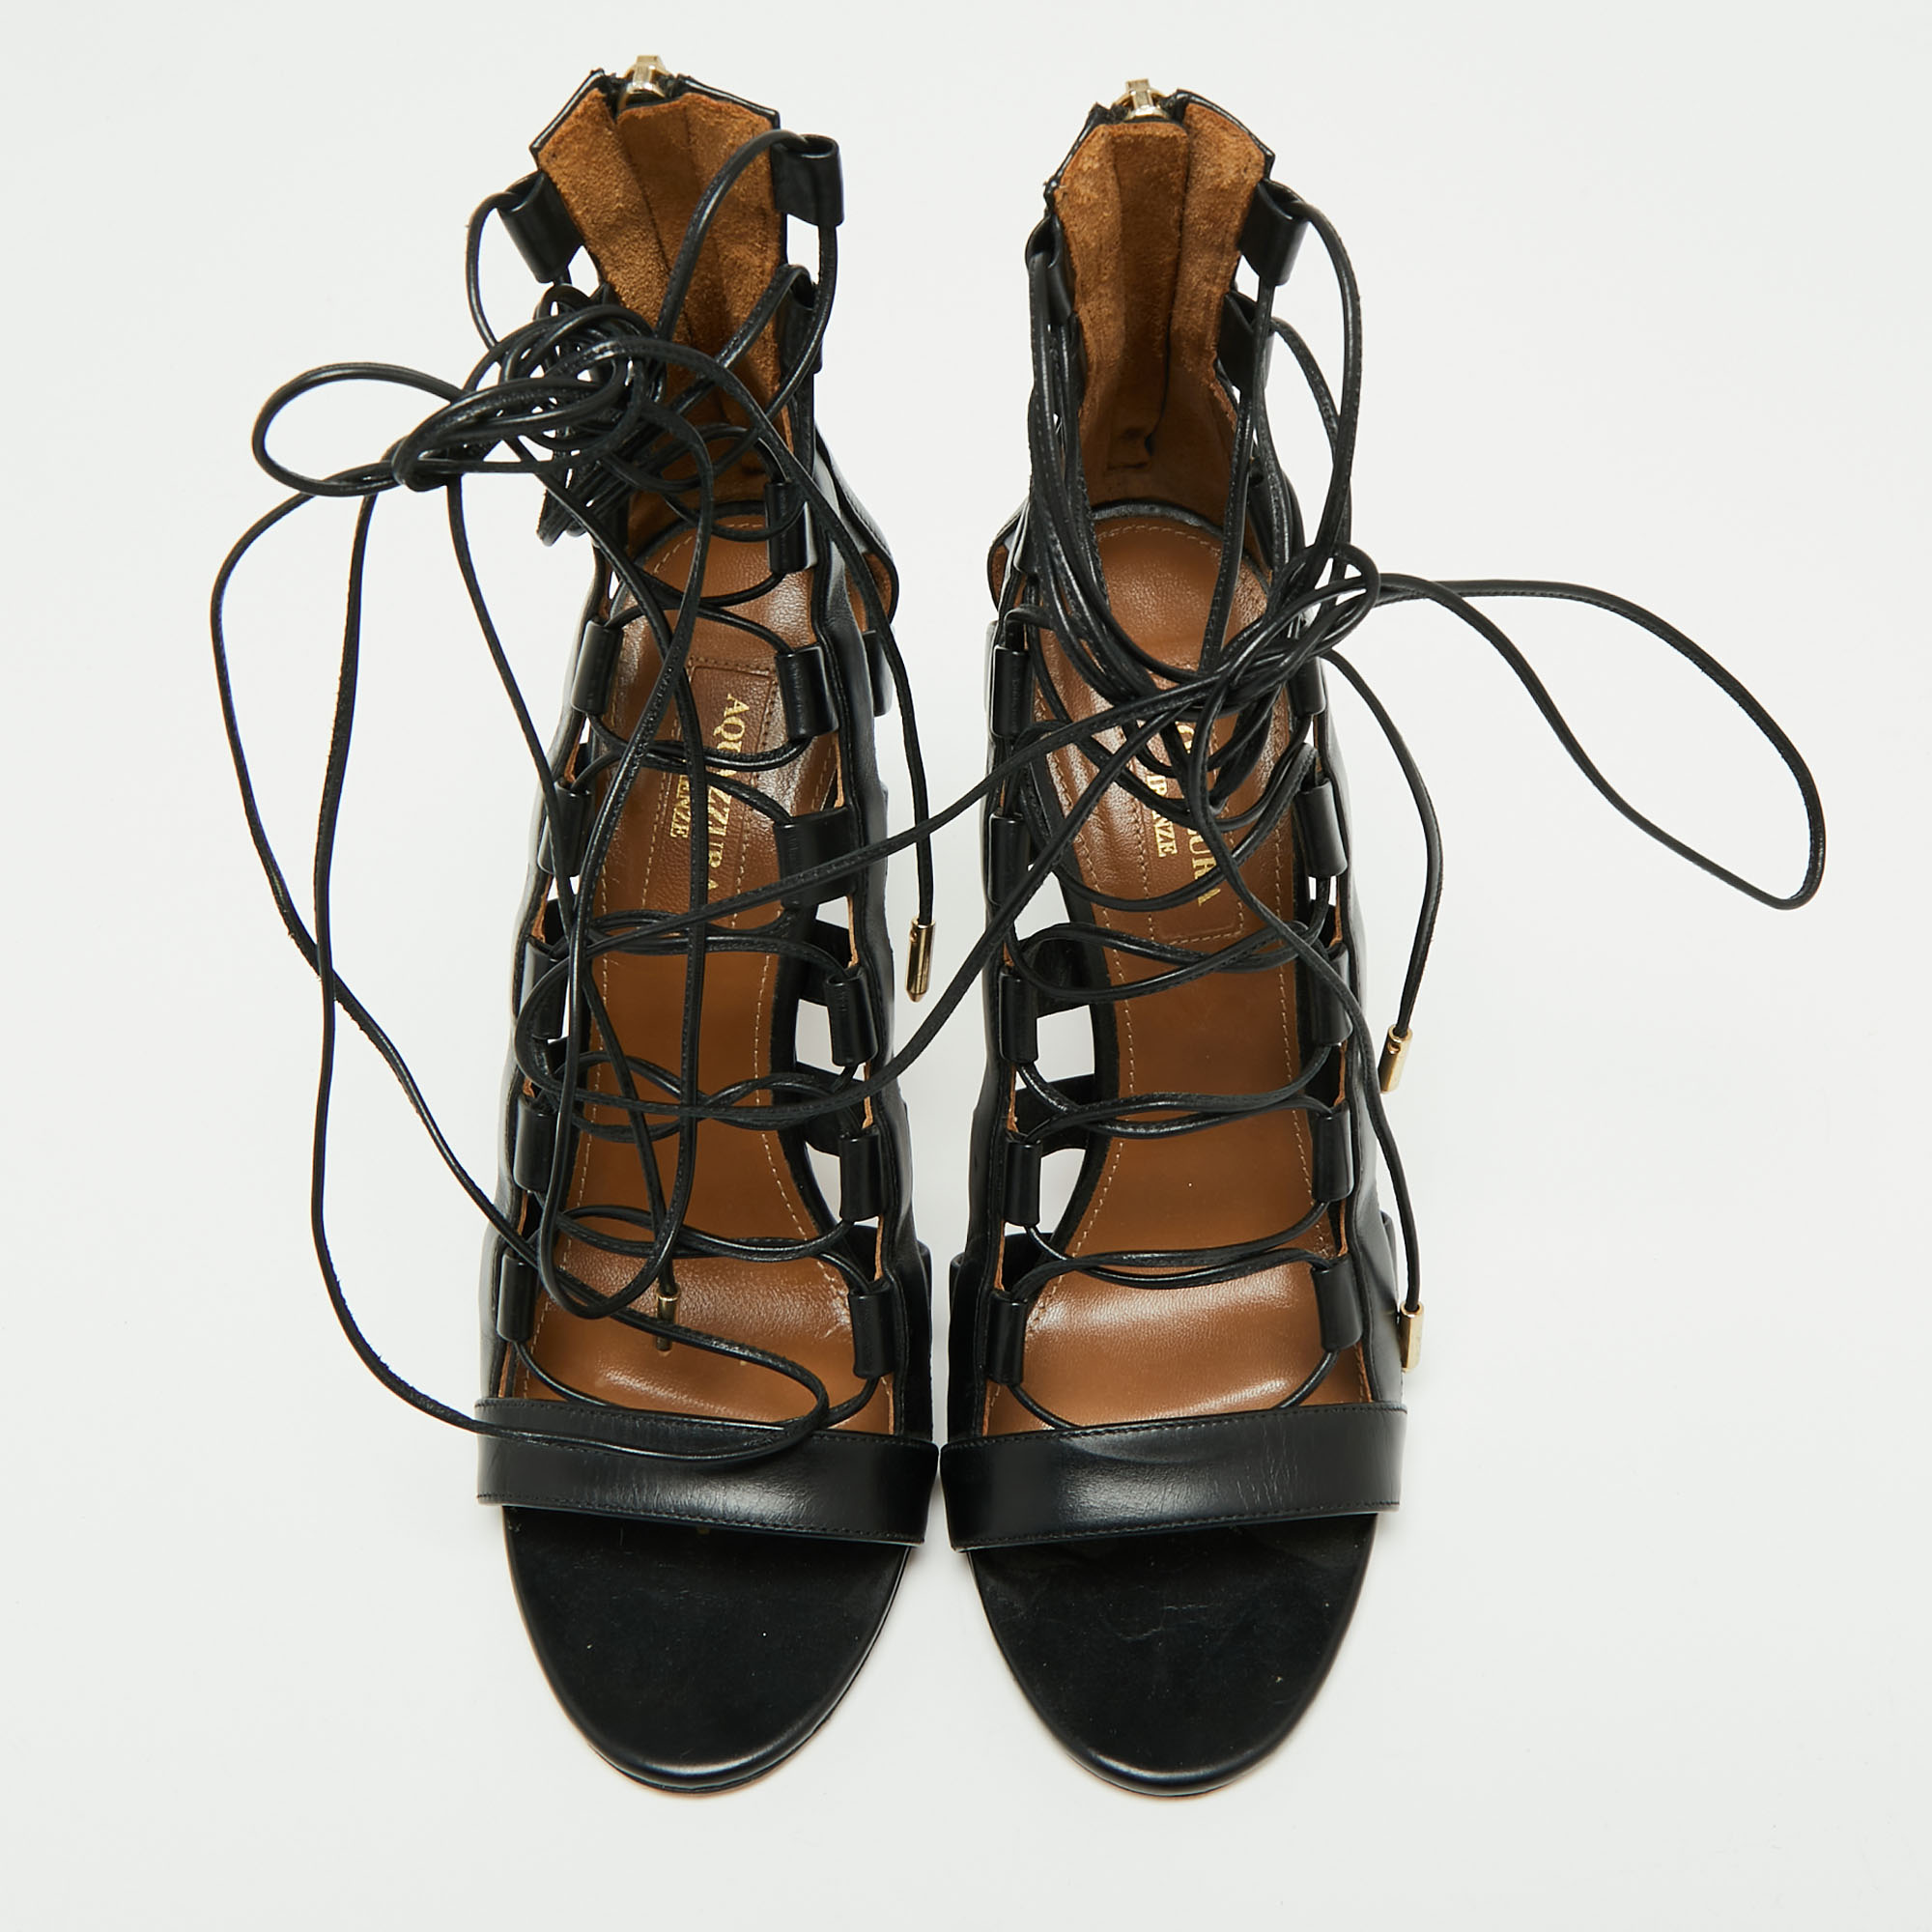 Aquazzura Black Leather Amazon Lace Up Open-Toe Sandals Size 37